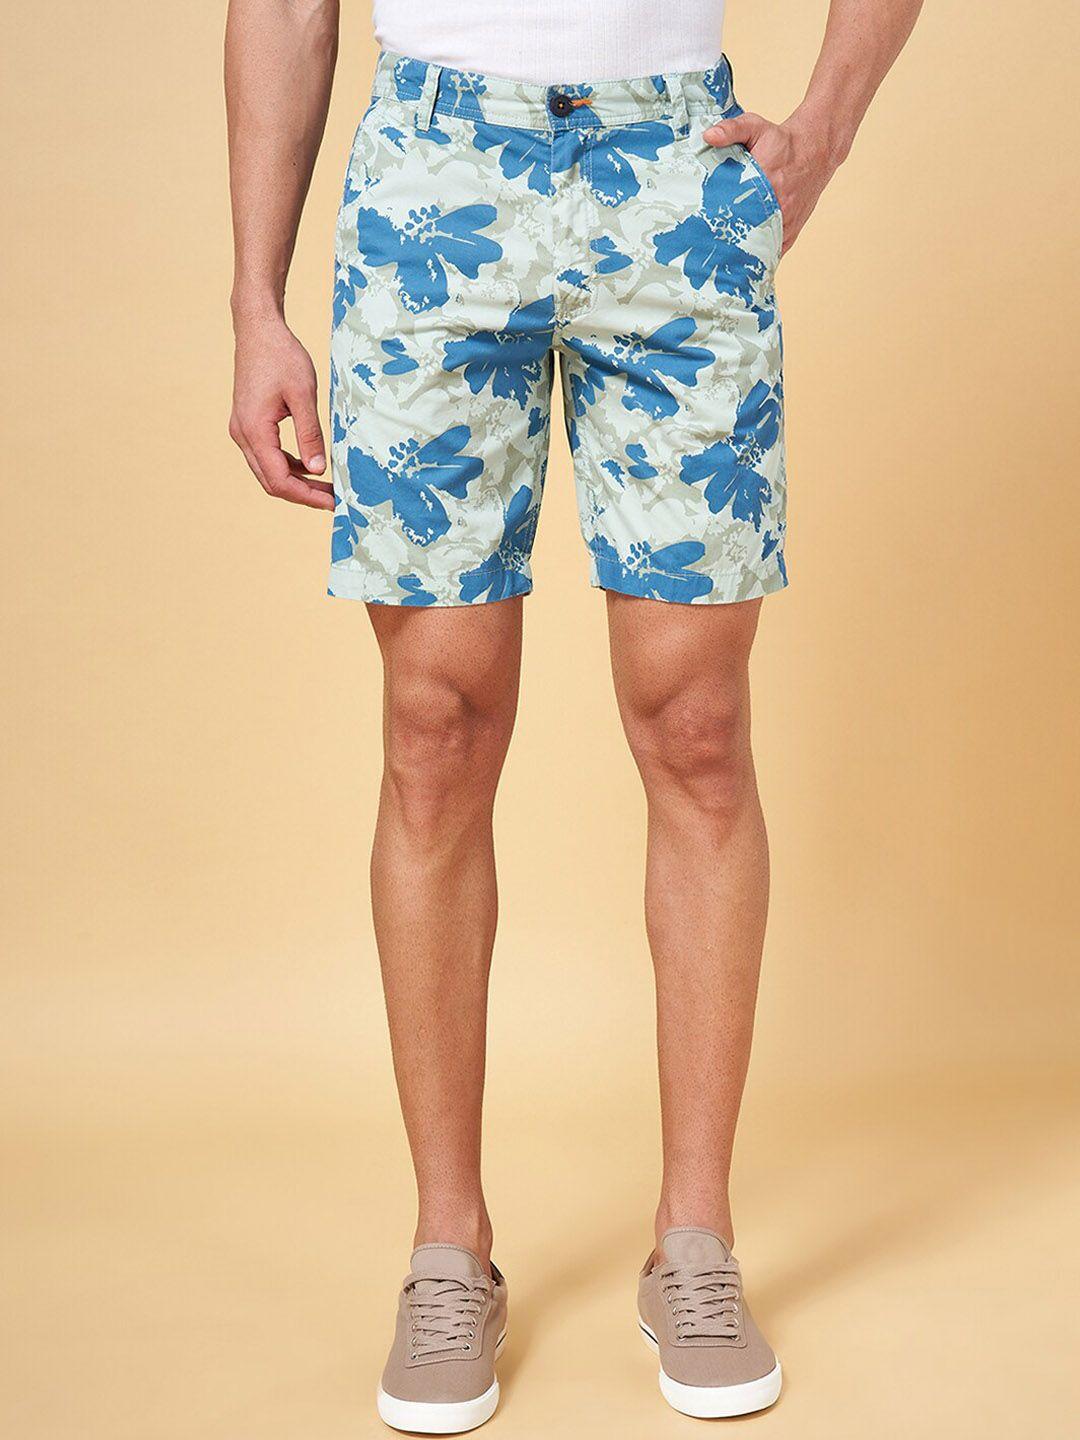 urban-ranger-by-pantaloons-men-floral-slim-fit-printed-mid-rise-cotton-shorts